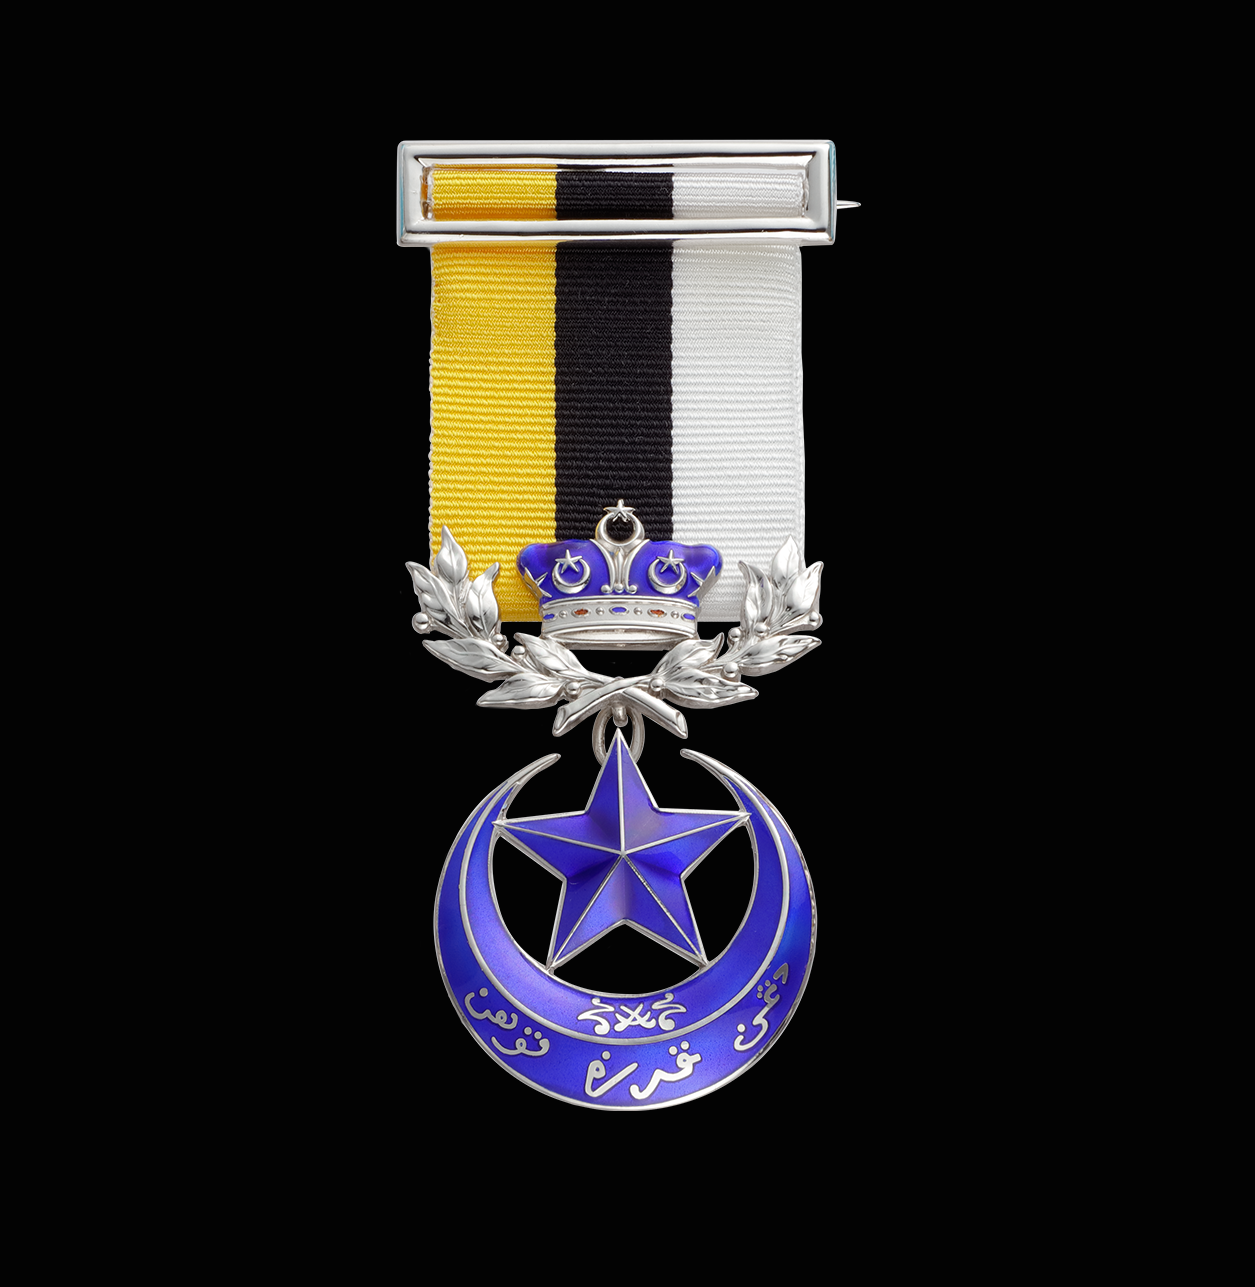 Iron Medal for Valour